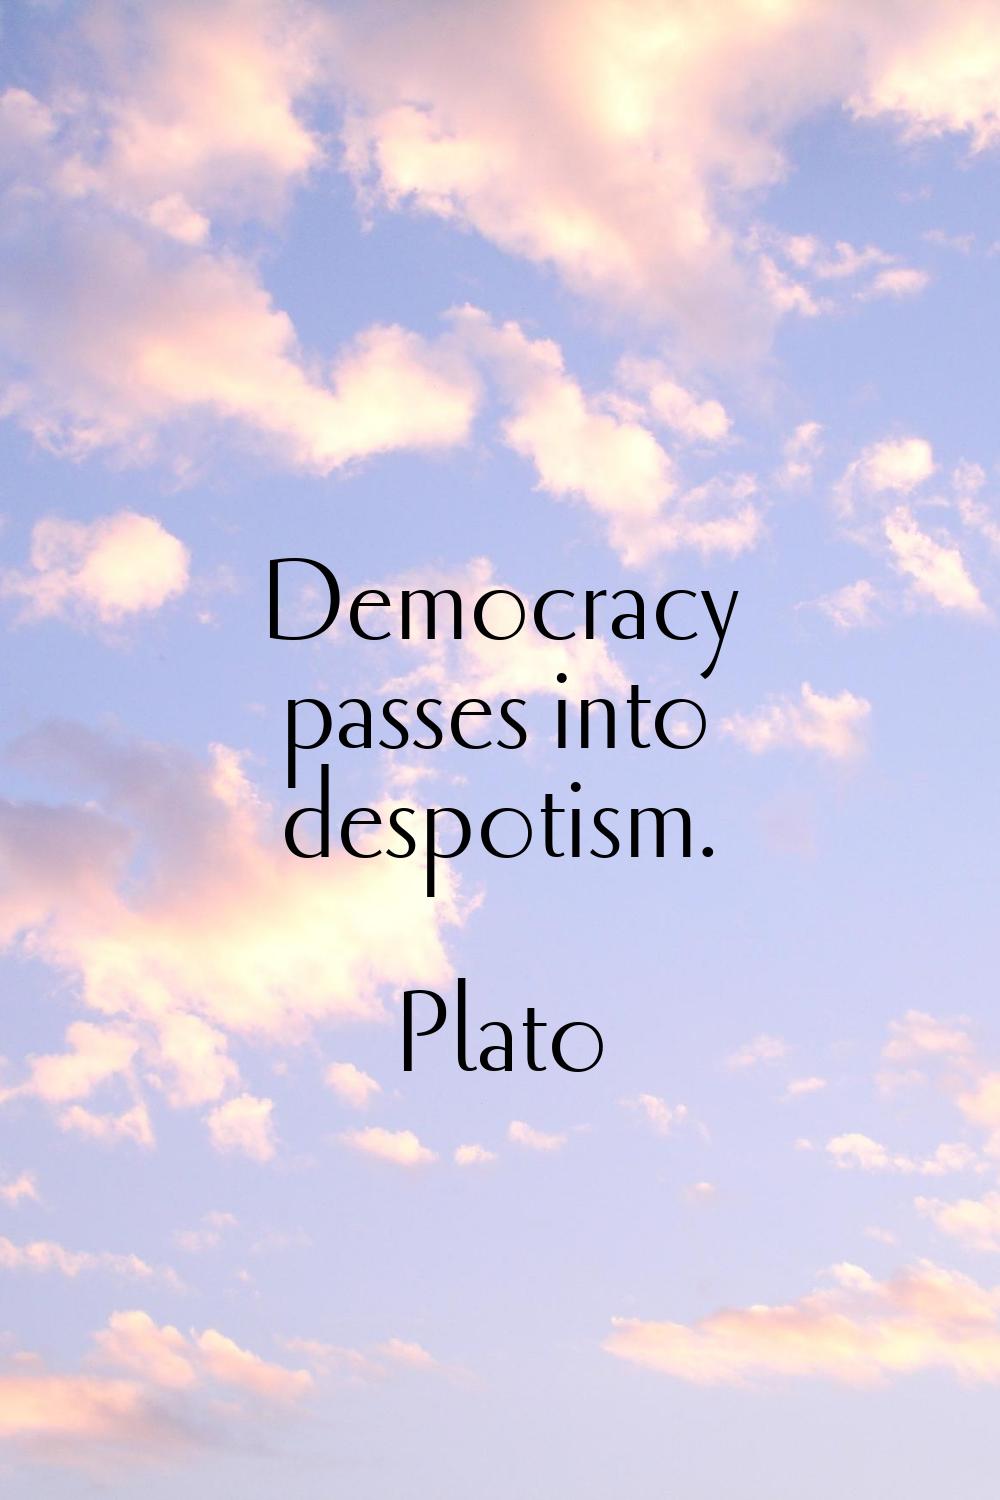 Democracy passes into despotism.